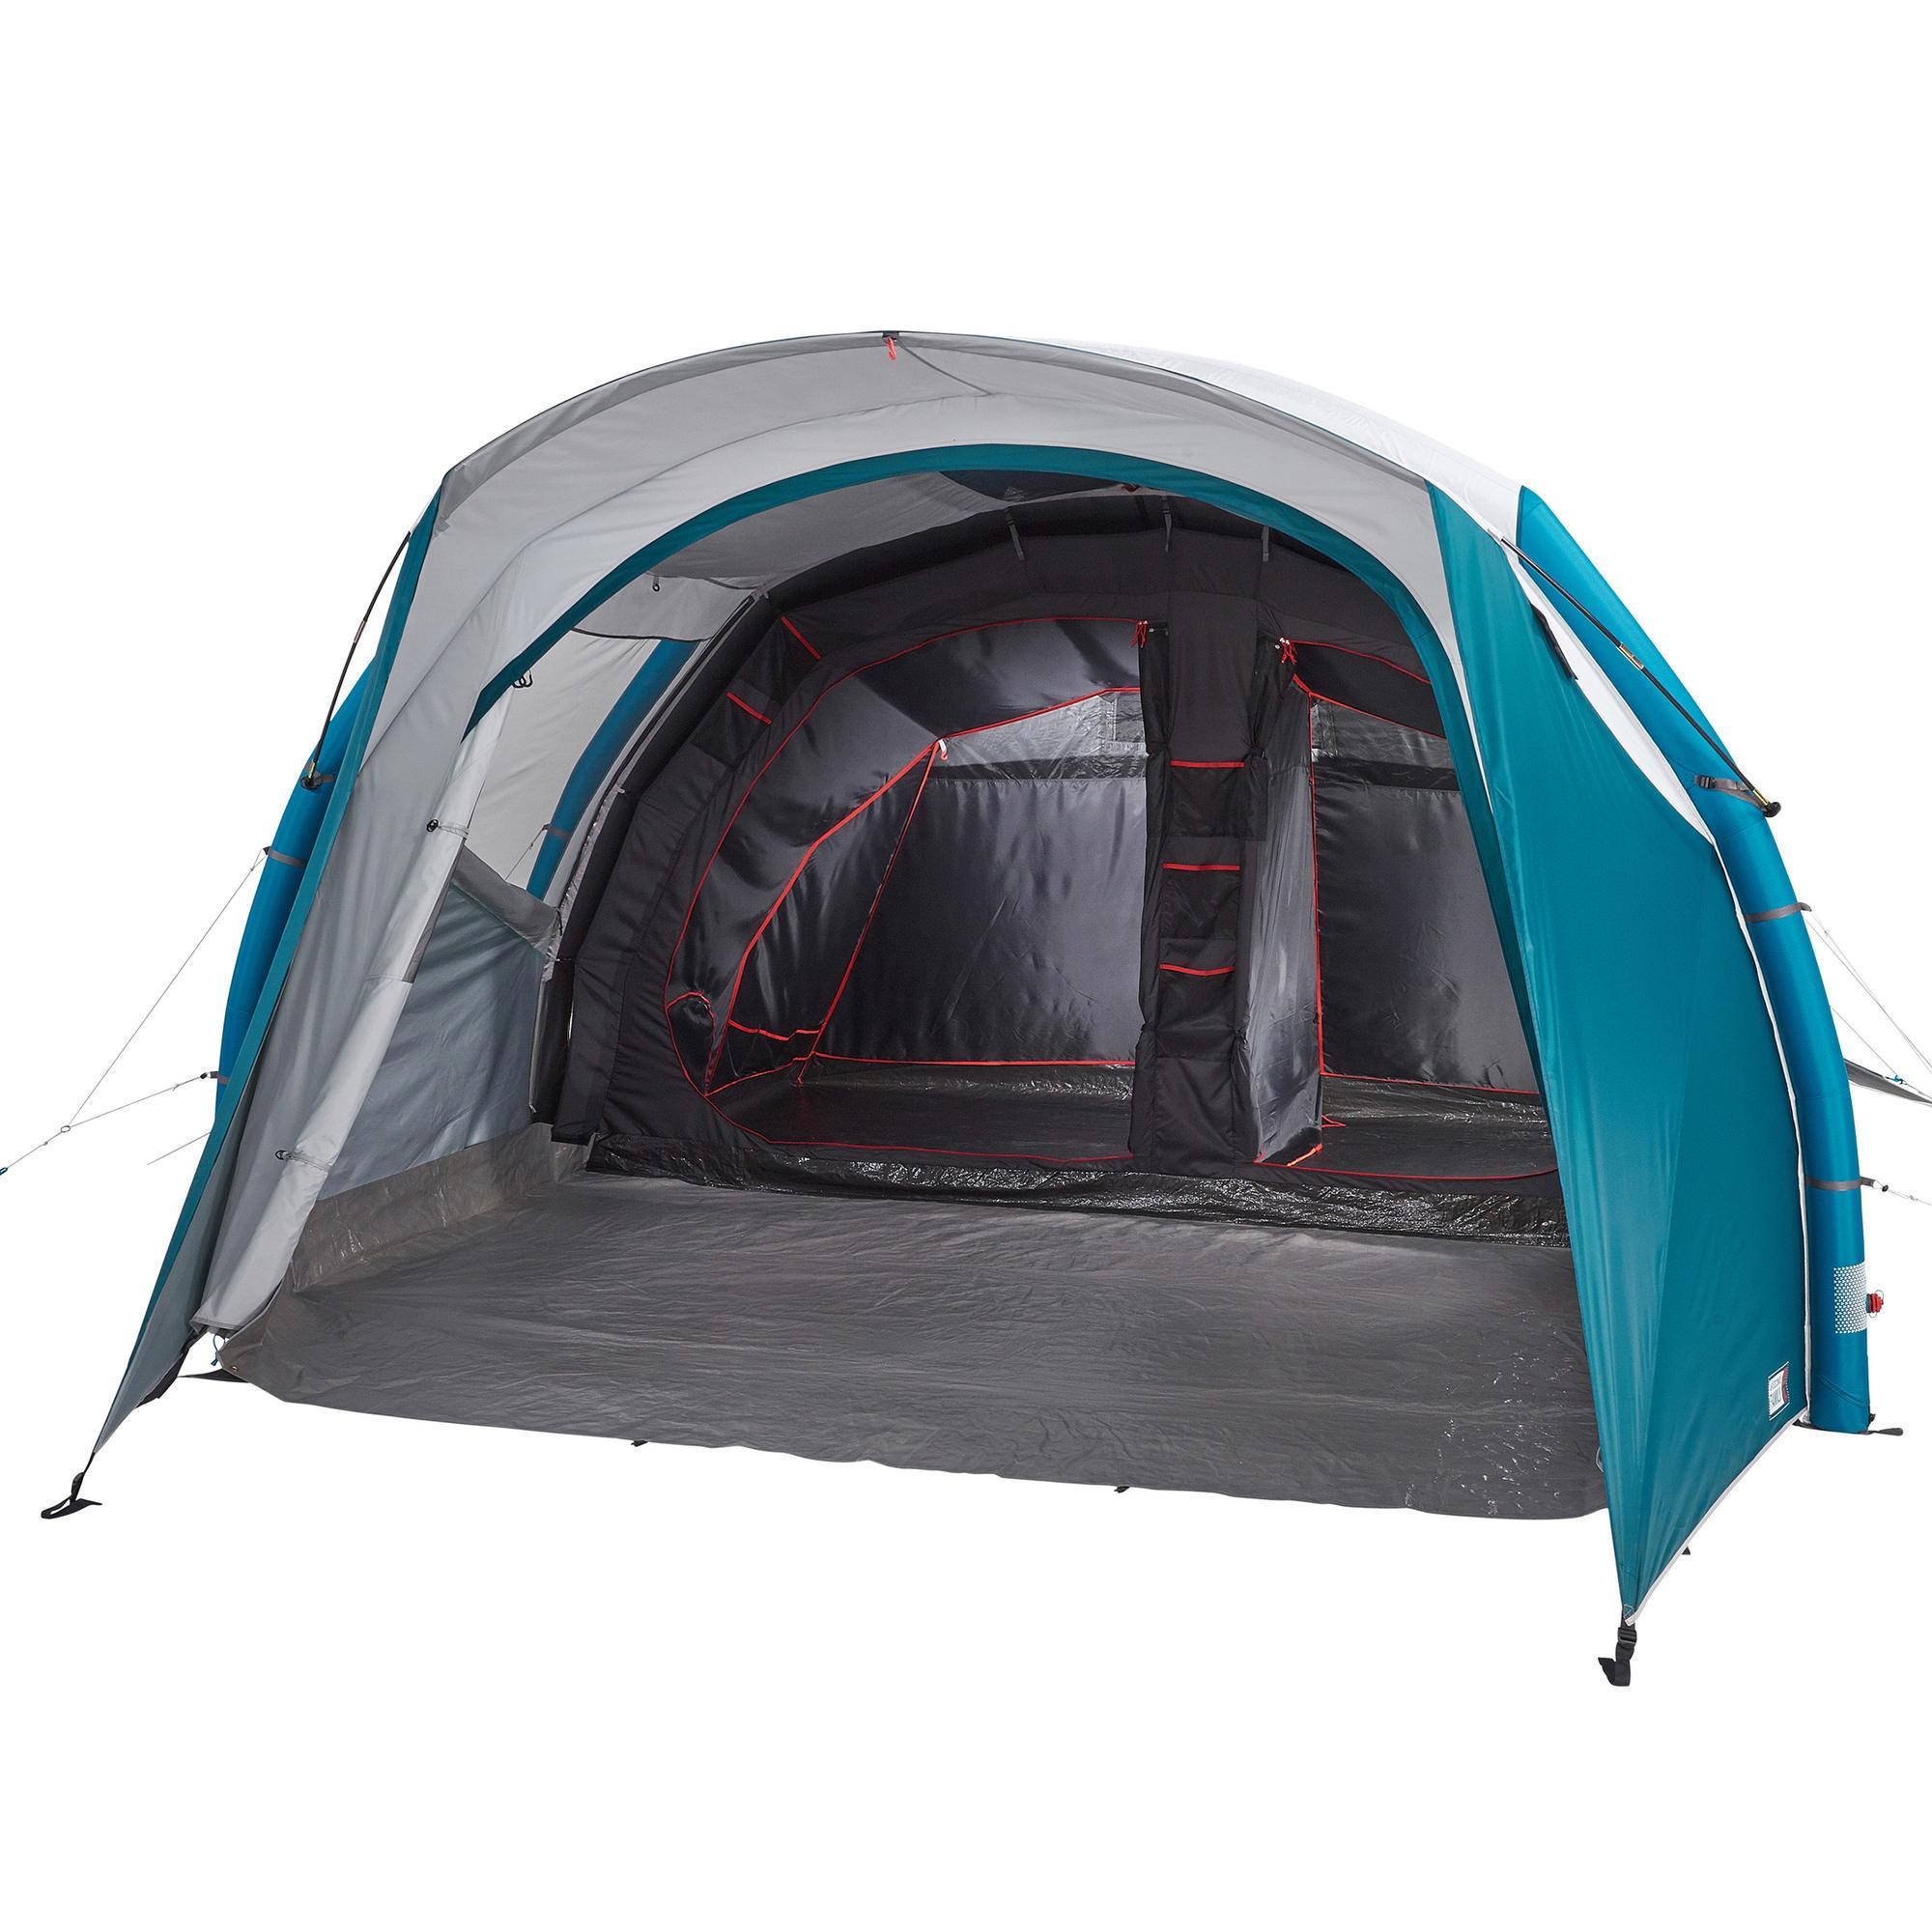 decathlon air tent 5.2